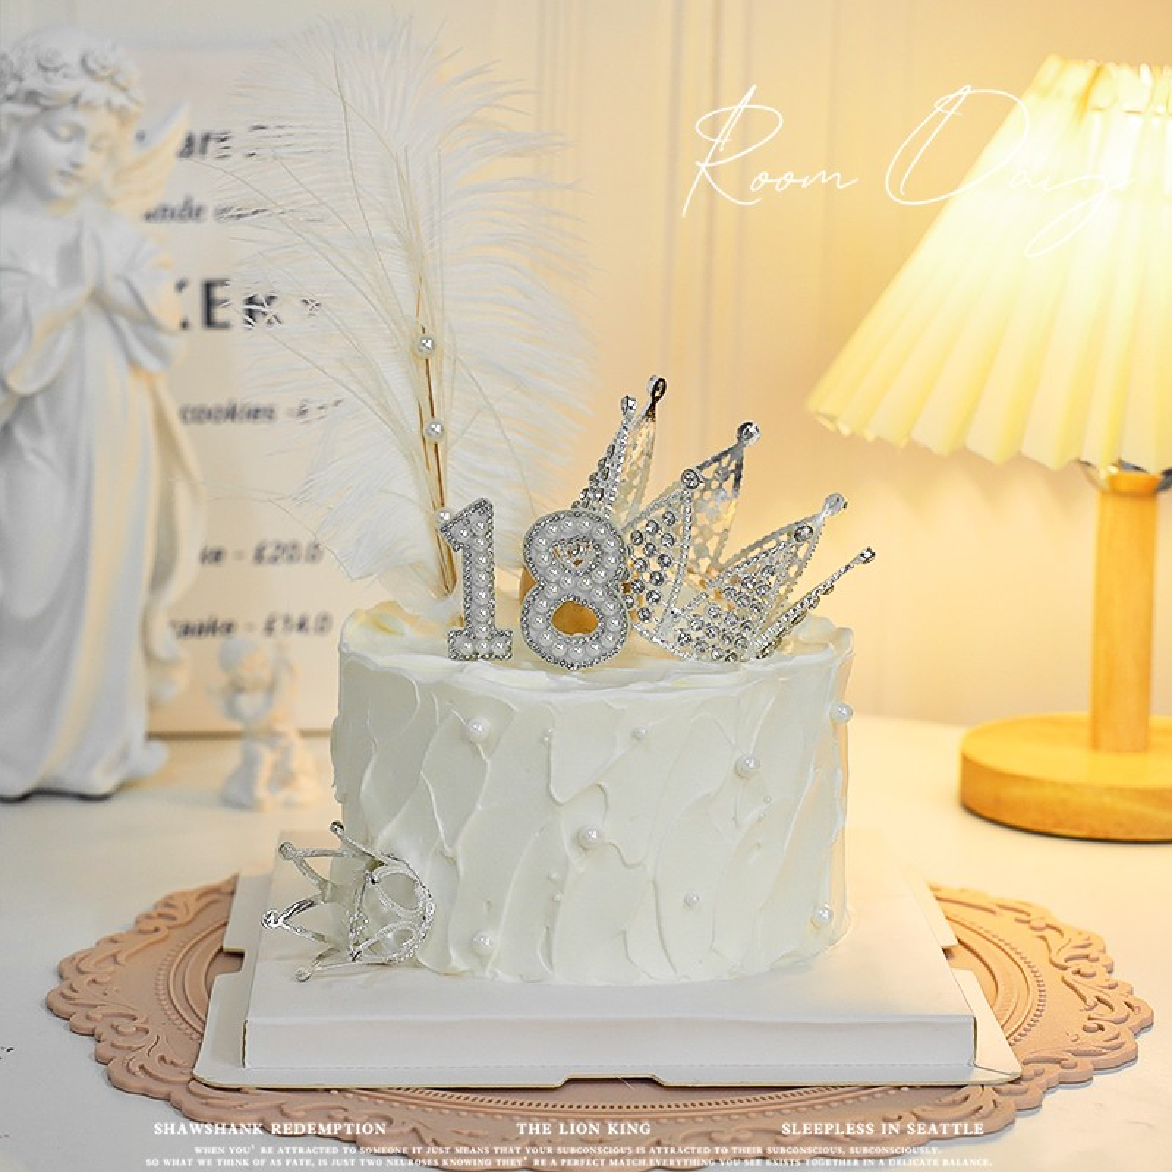 Cake Topper Cupcake Decoration  - Decorative glitter & white Pearl - Number2 - Rampant Coffee Company